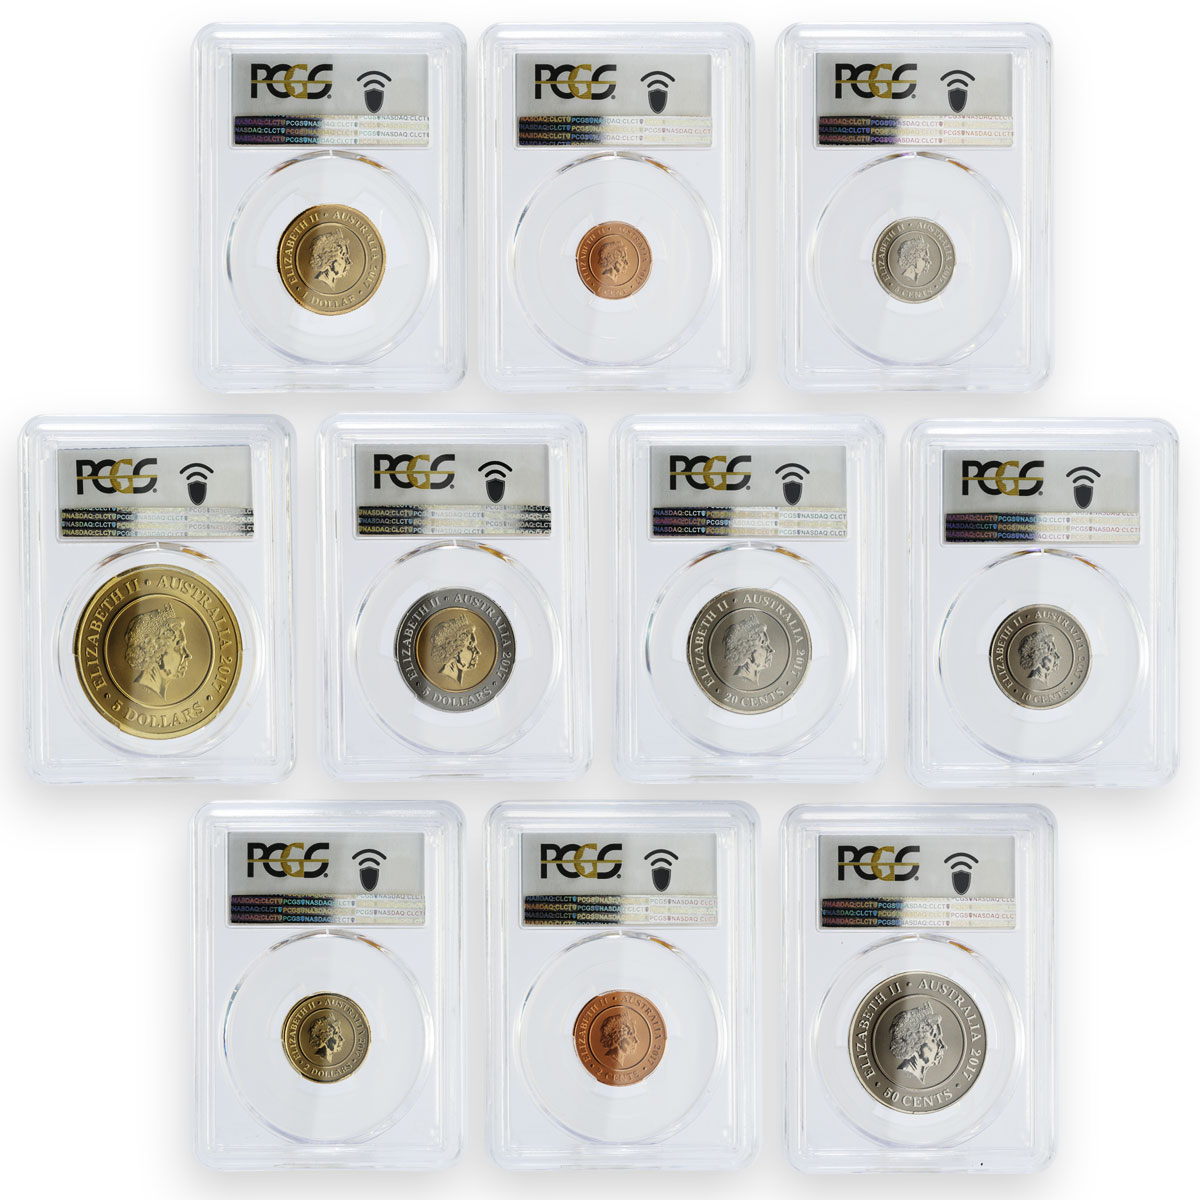 Australia set of 10 coins Planetary Coins MS70 PCGS aluminuim coins 2017